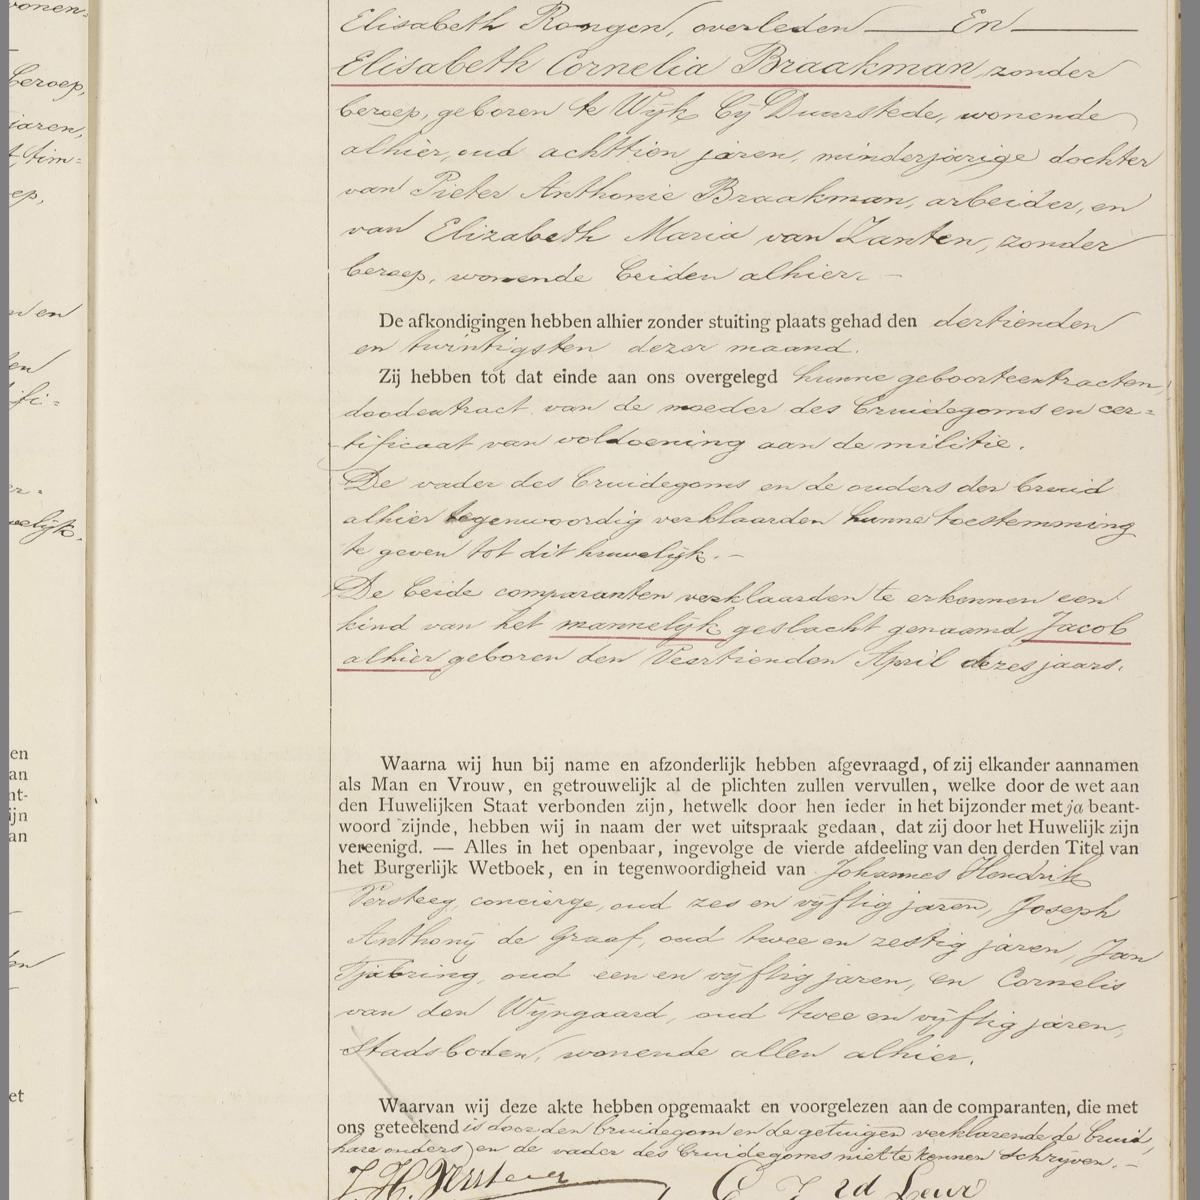 Civil registry of marriages, Utrecht, 1891, record 591